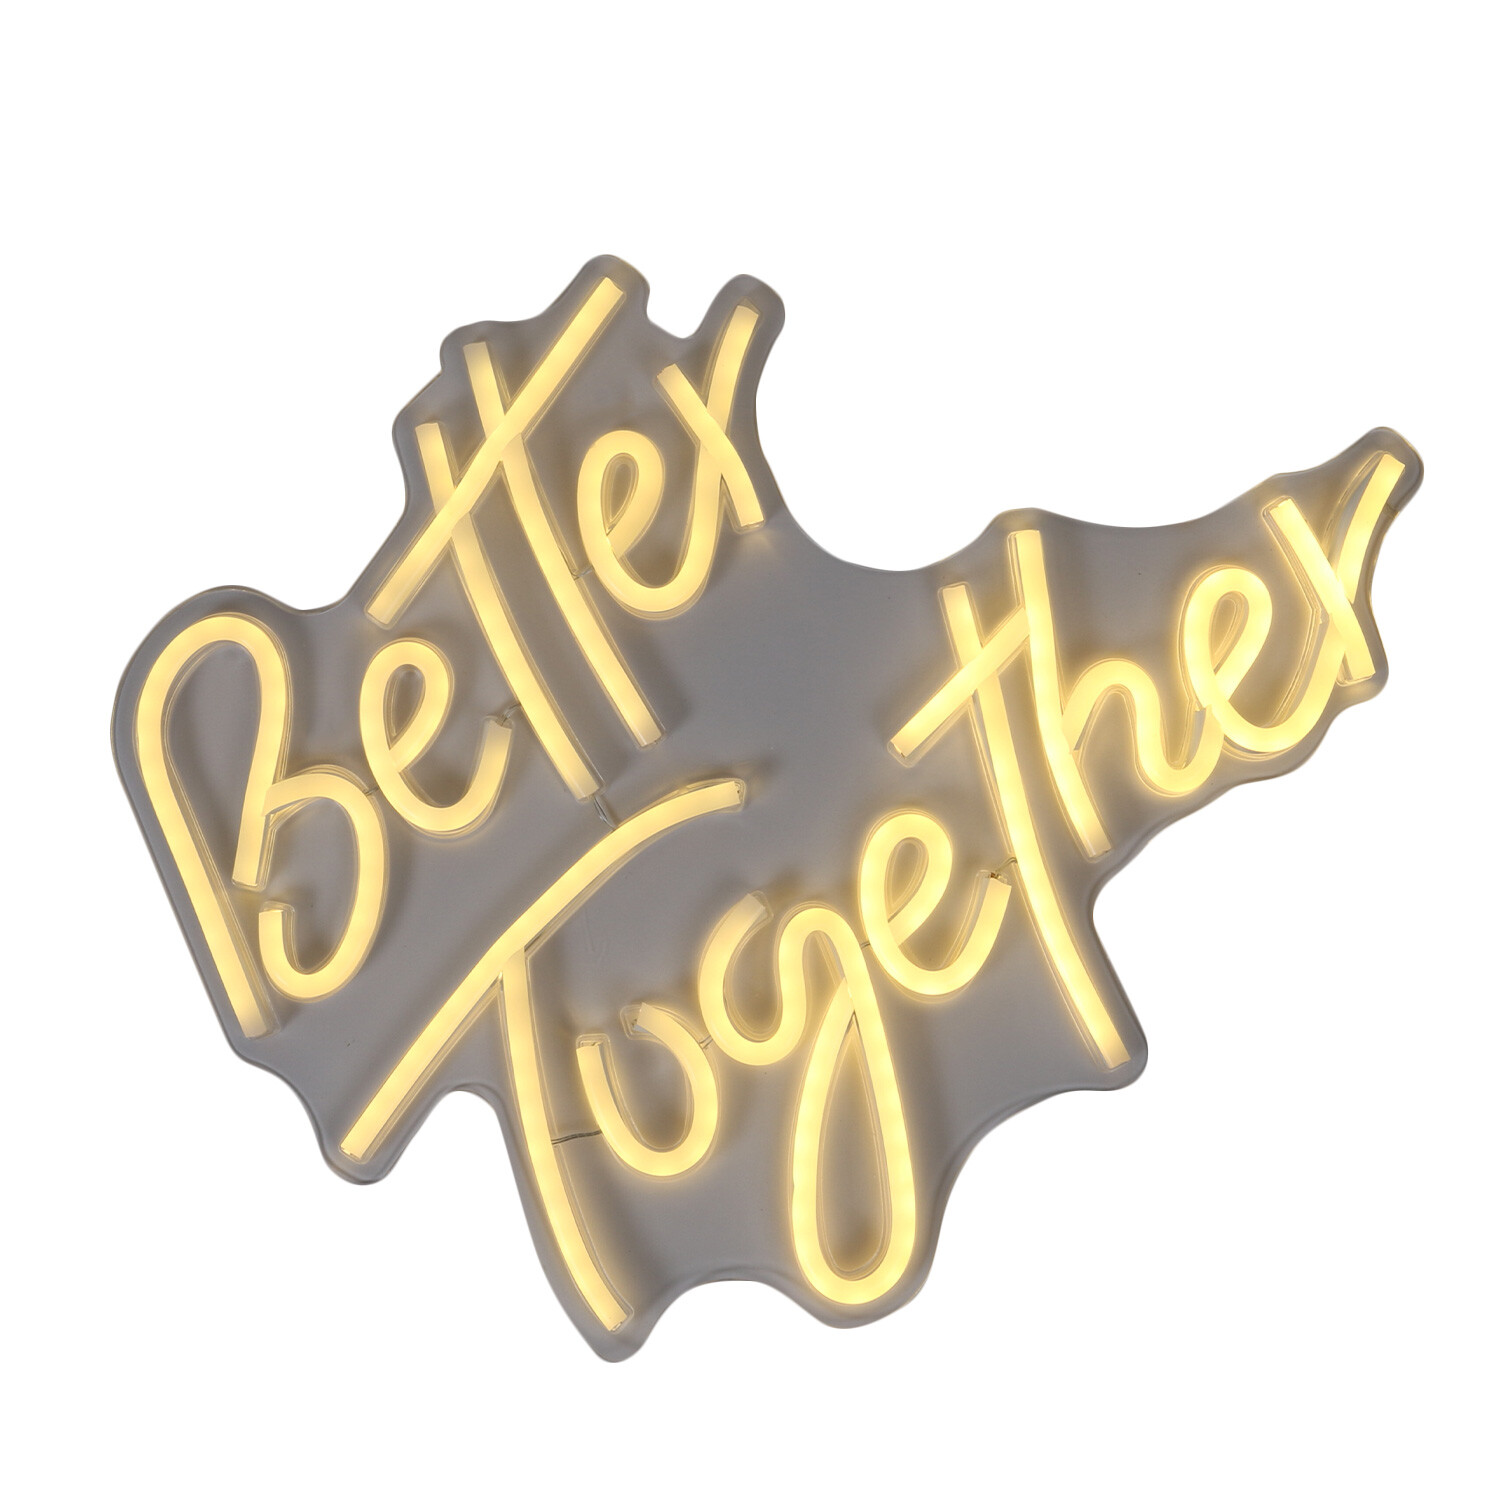 Better Together LED Neon Sign Image 1